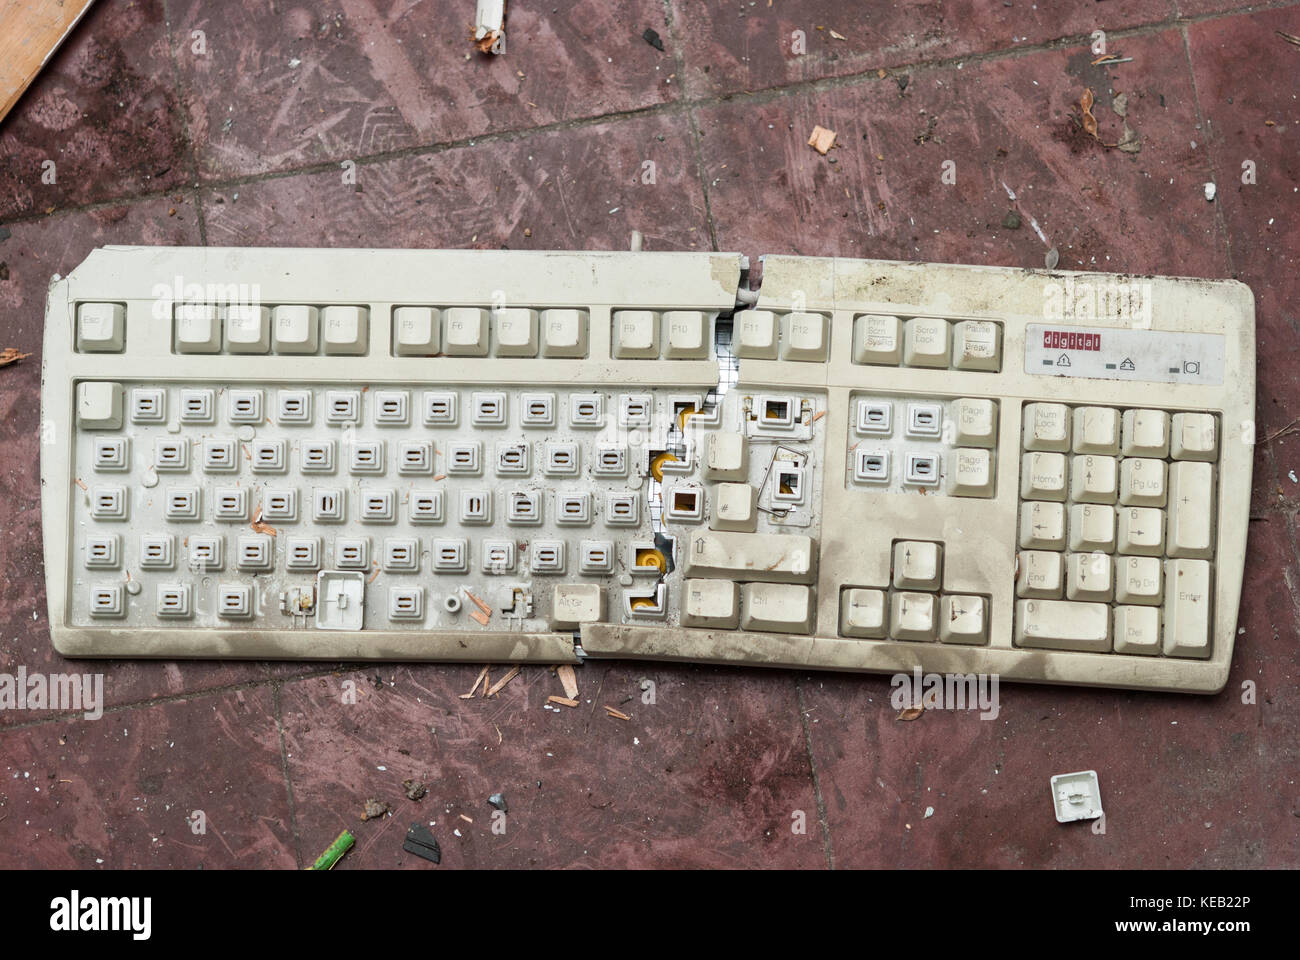 Alte kaputte PC Computer Tastaturen Stockfoto